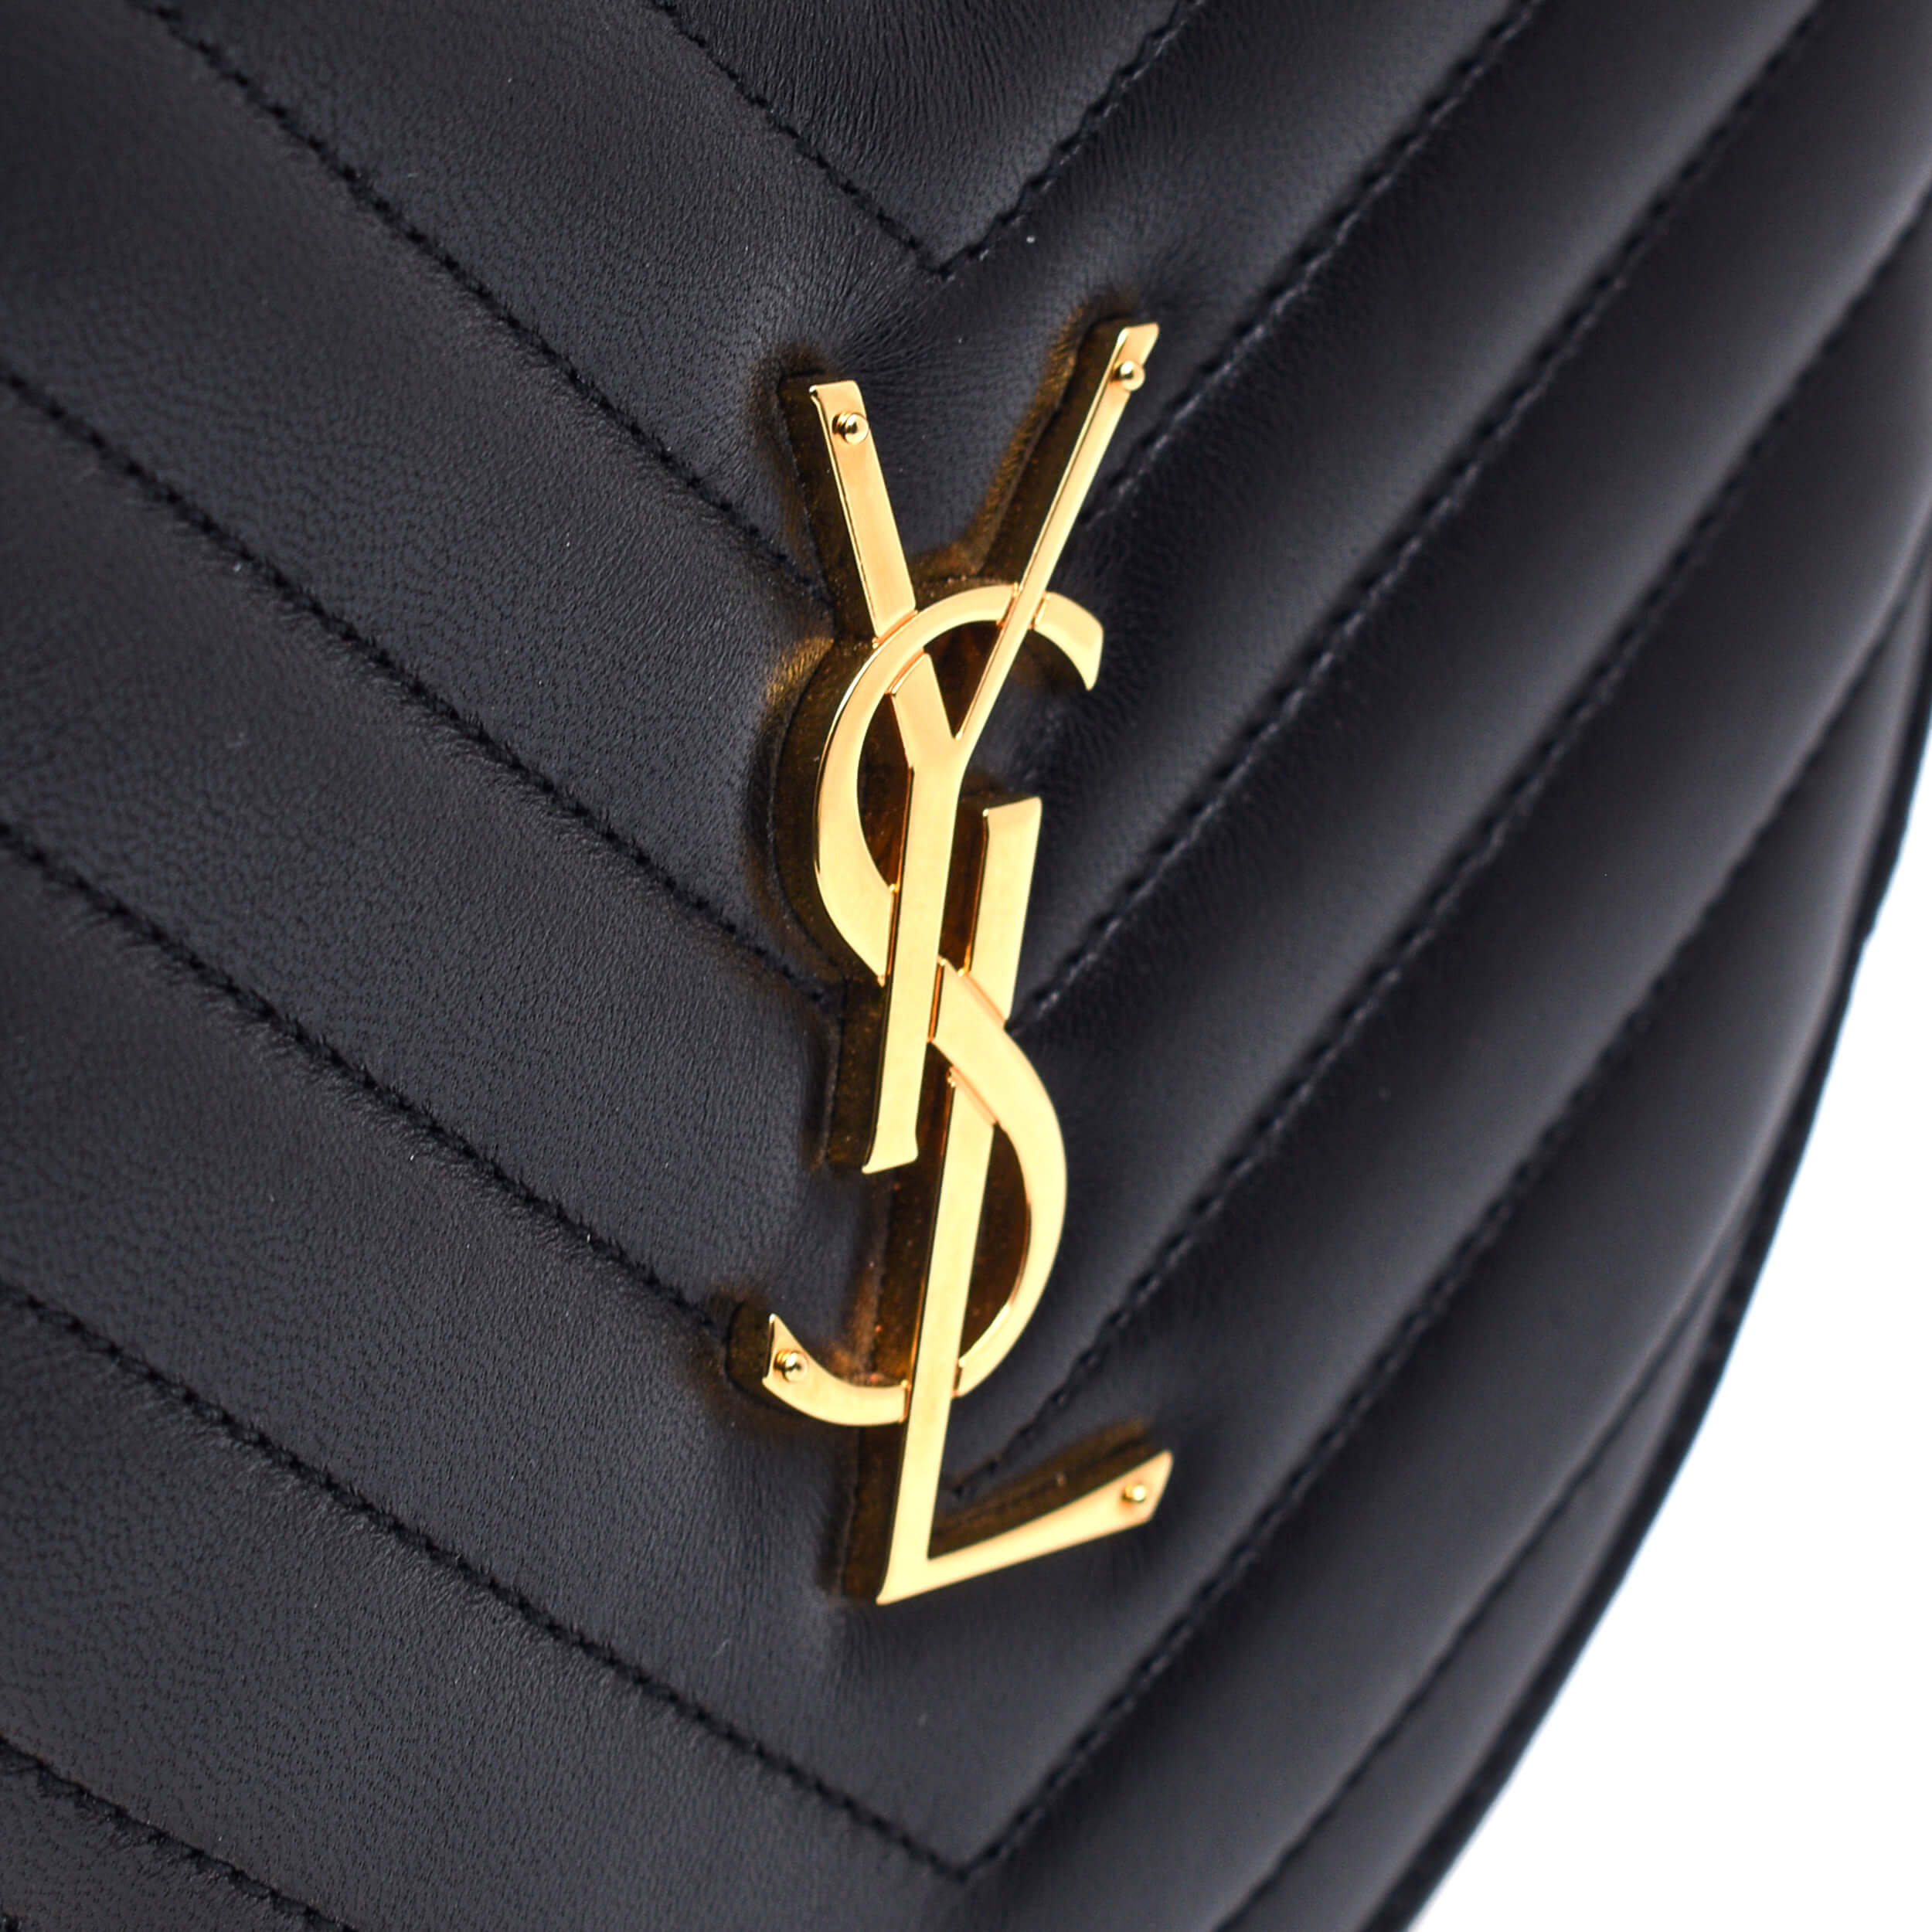 Yves Saint Laurent - Black Chevron Leather Love Heart Chain Small Shoulder Bag